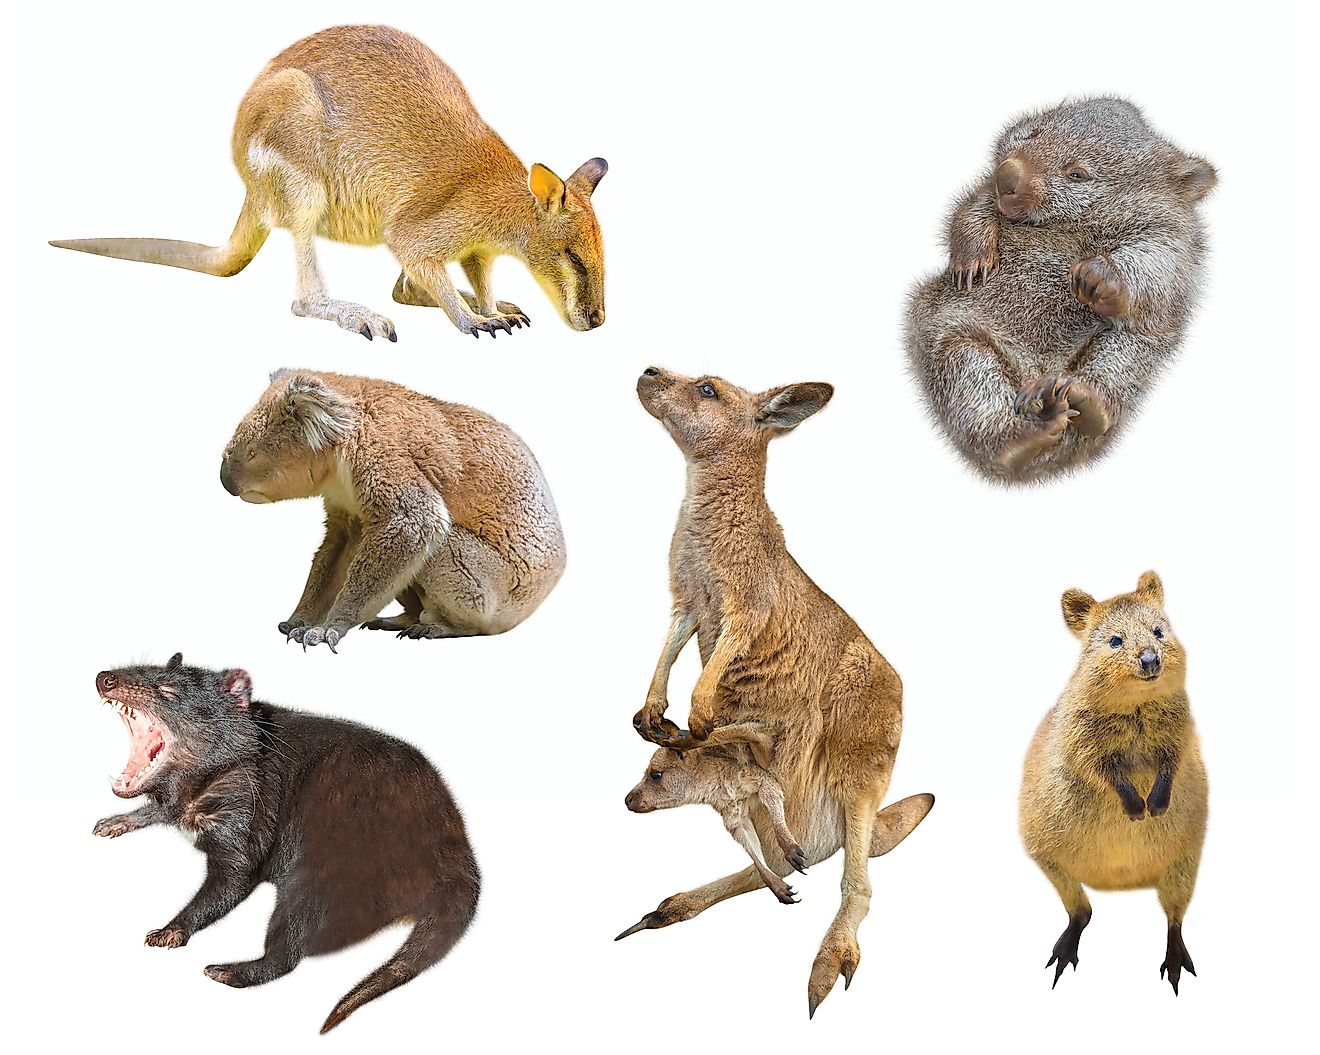 Australian marsupial mammals. Wallaby, Tasmanian Devil, Wombat, Kangaroo with Joey, Quokka and Koala. Image credit:  Benny Marty/Shutterstock.com